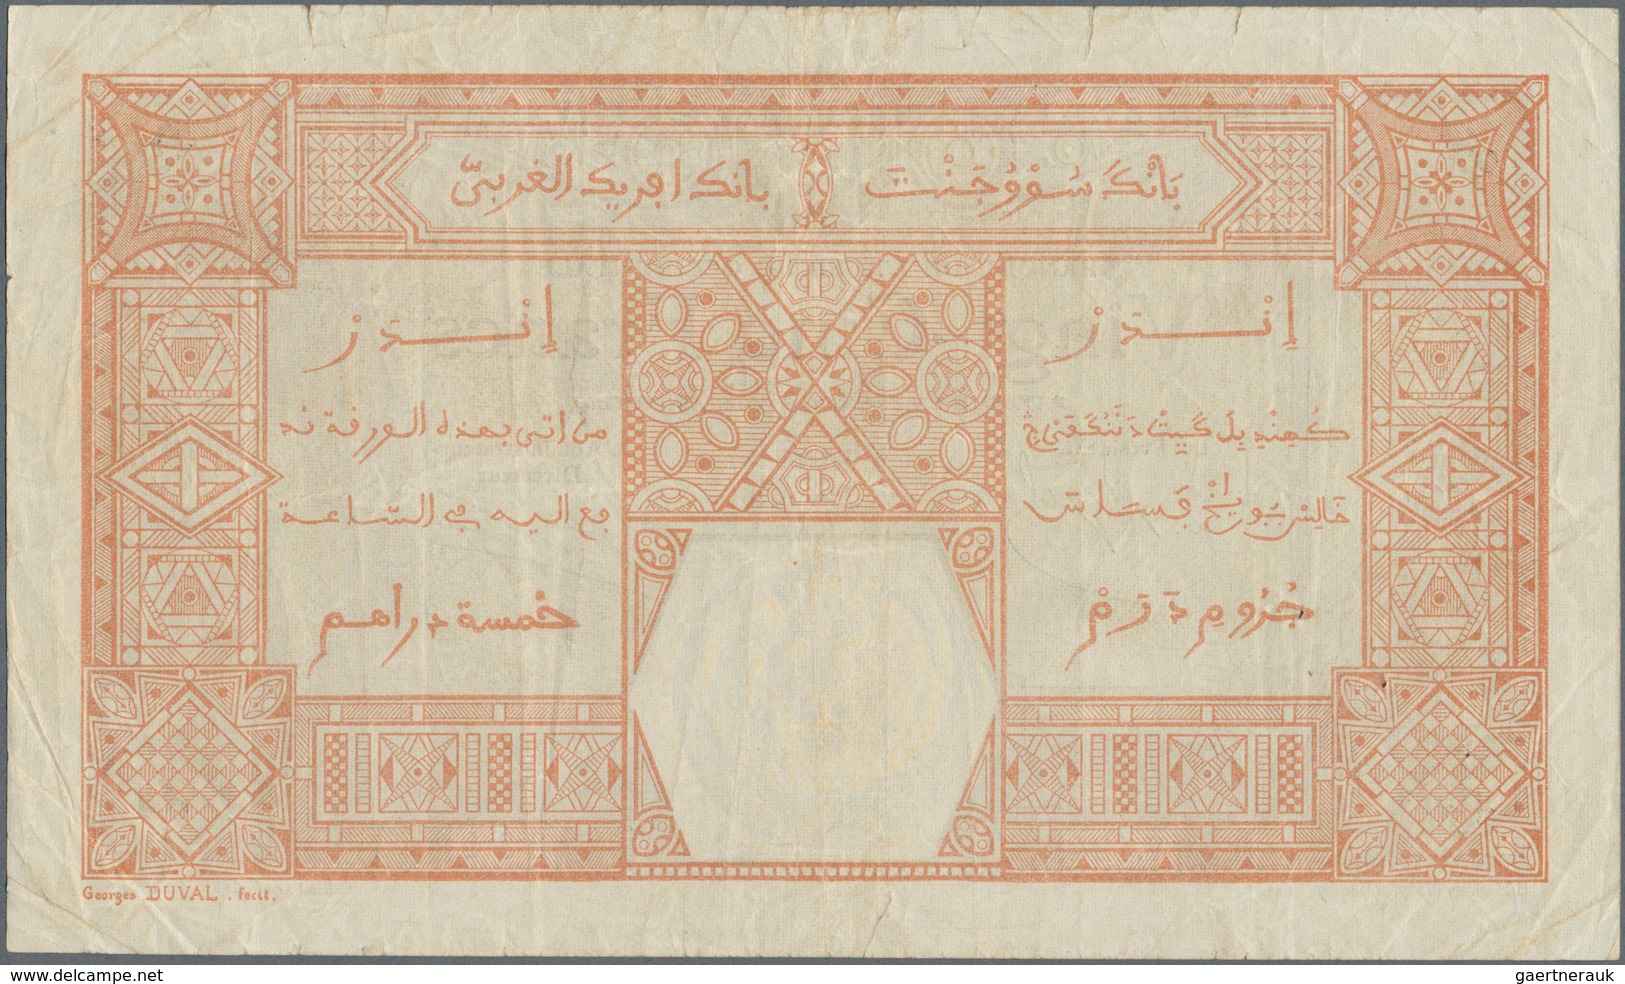 French West Africa / Französisch Westafrika: 25 Francs 1926 DAKAR P. 7Bc In Used Condition With Fold - Estados De Africa Occidental